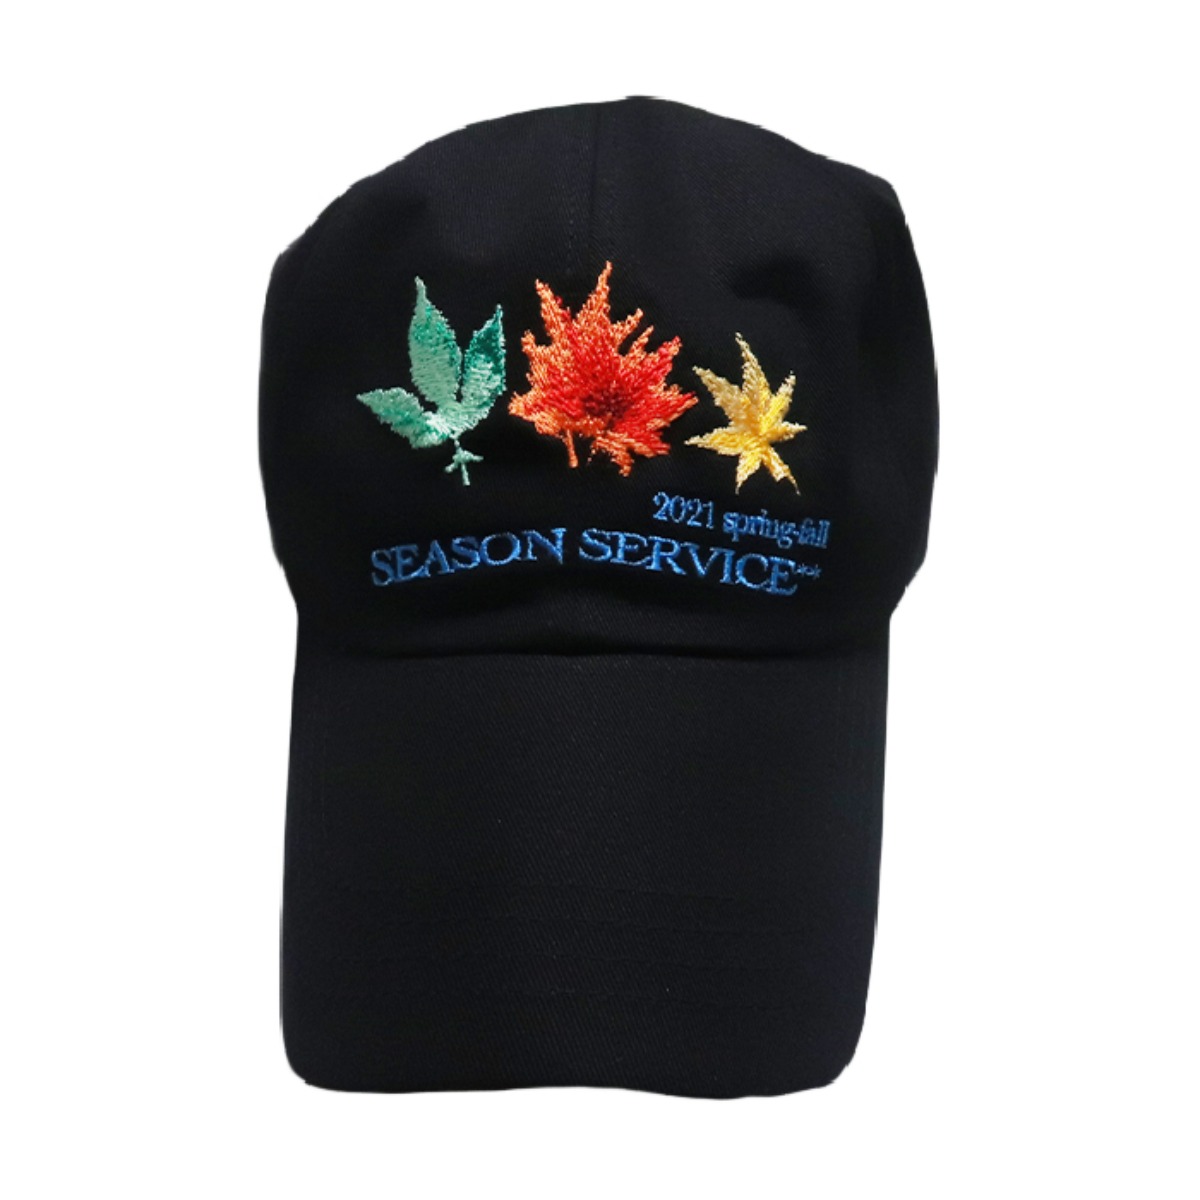 TCM season service cap